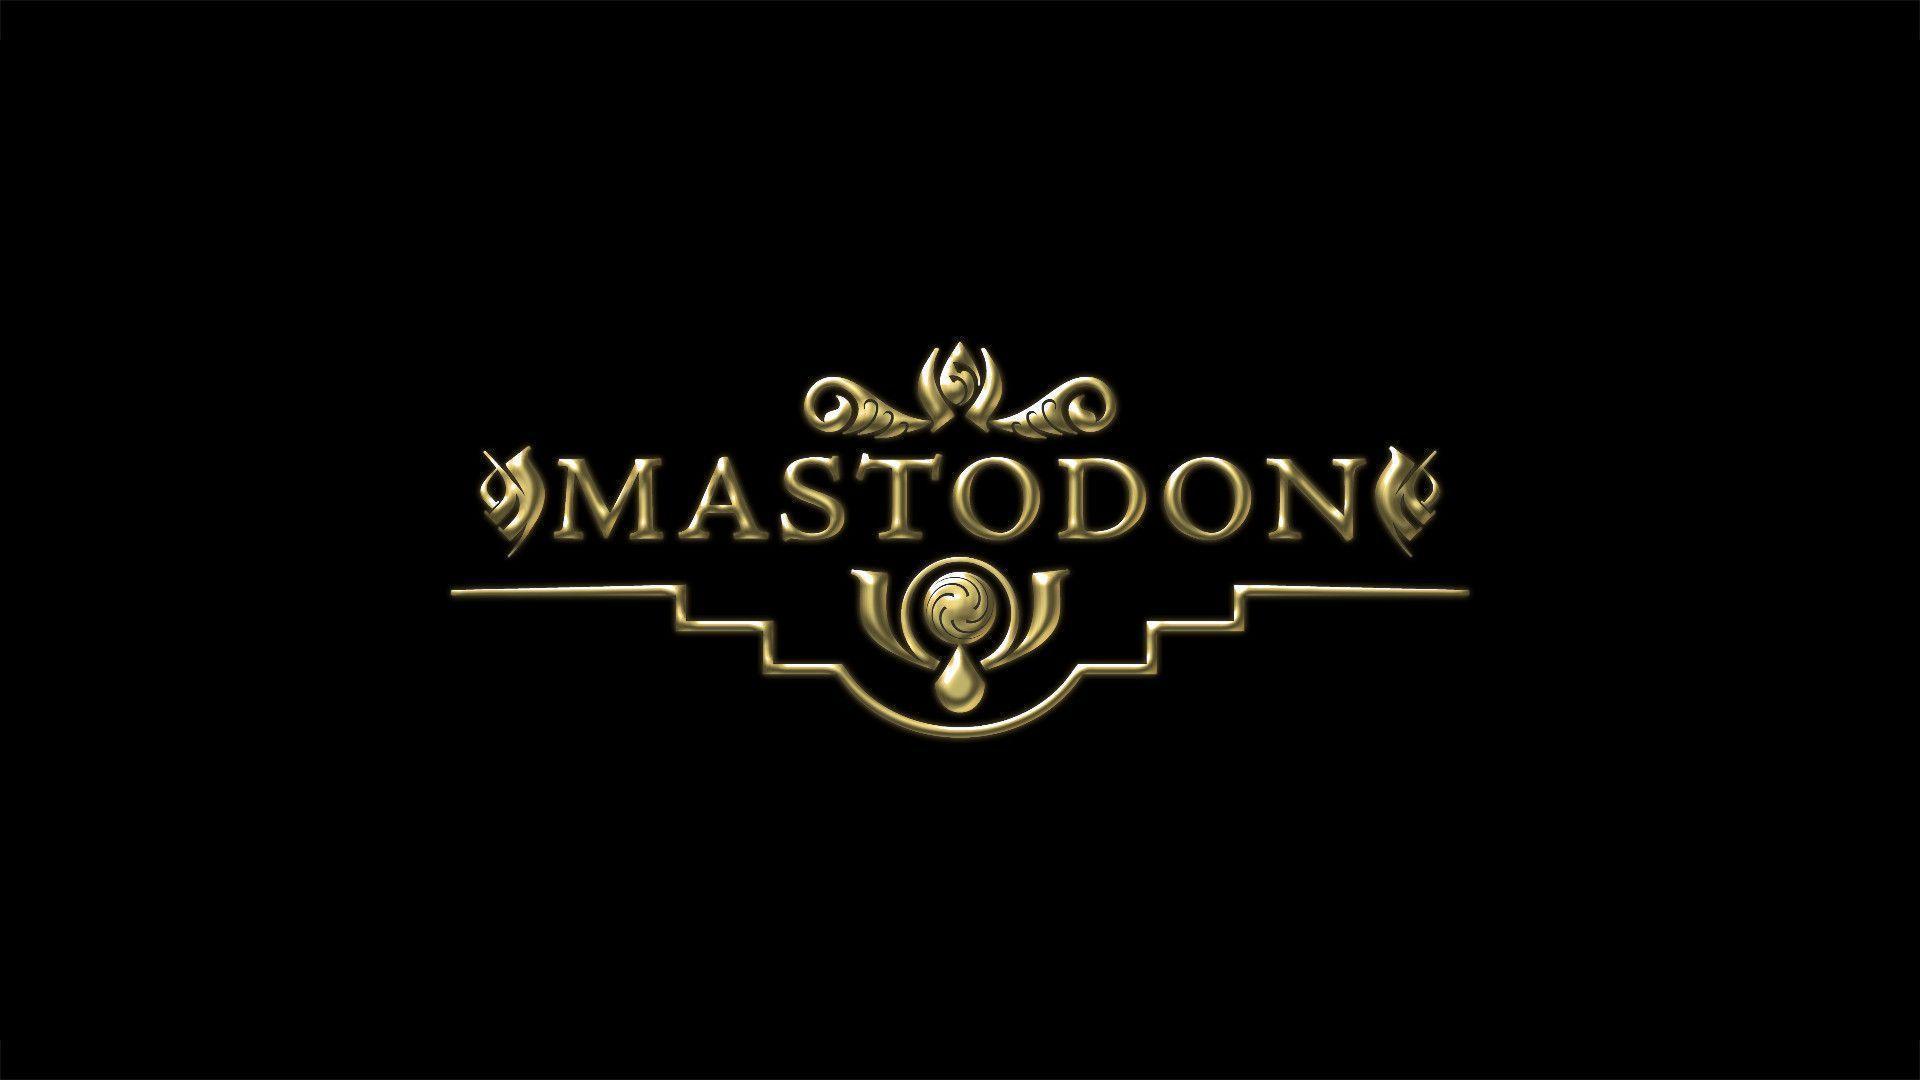 Mastodon by woody029